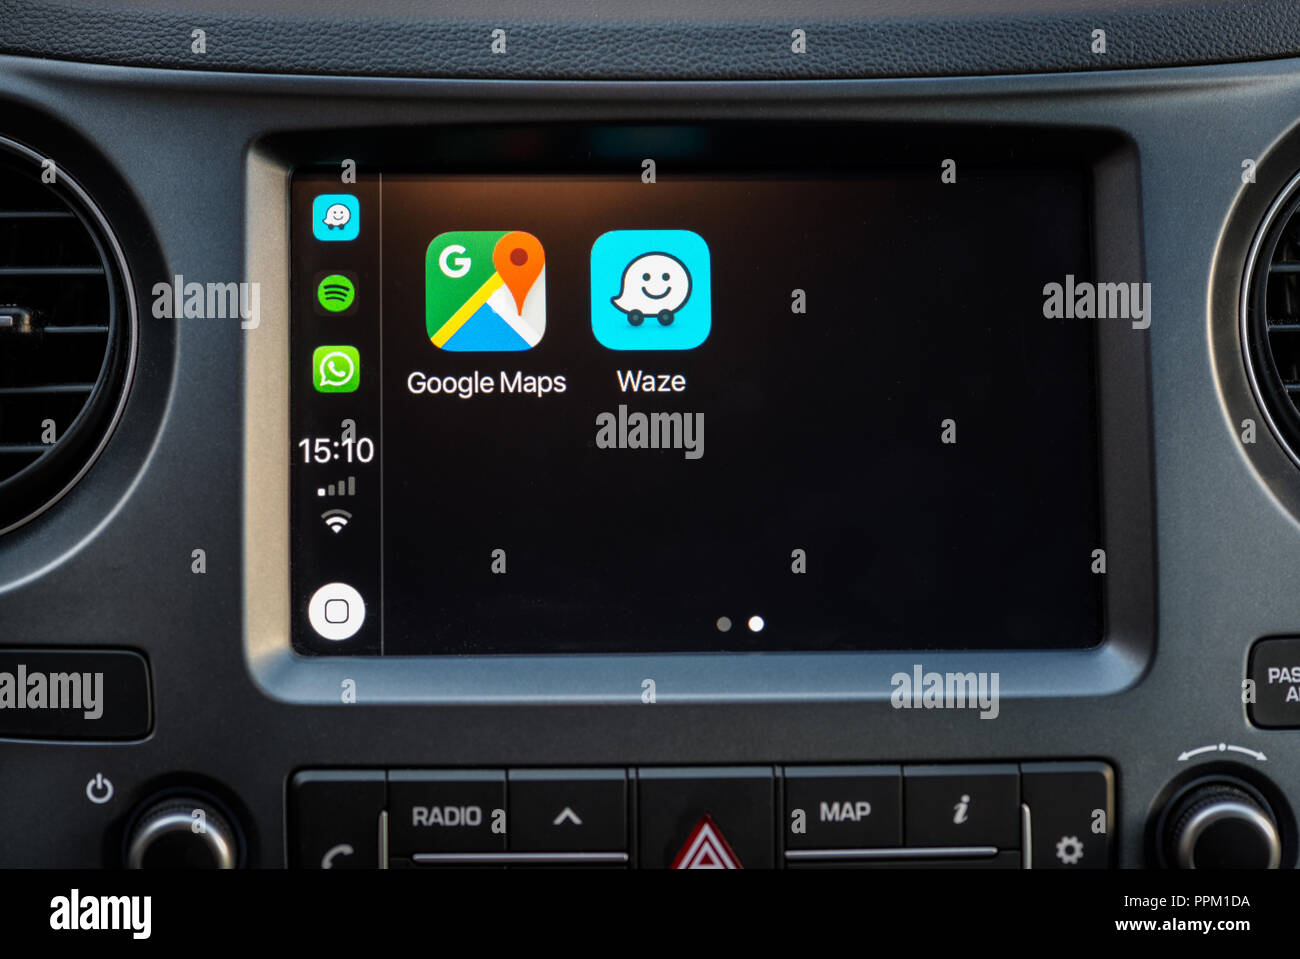 Apple Carplay screen in car dashboard displaying Google Maps and Waze apps Stock Photo